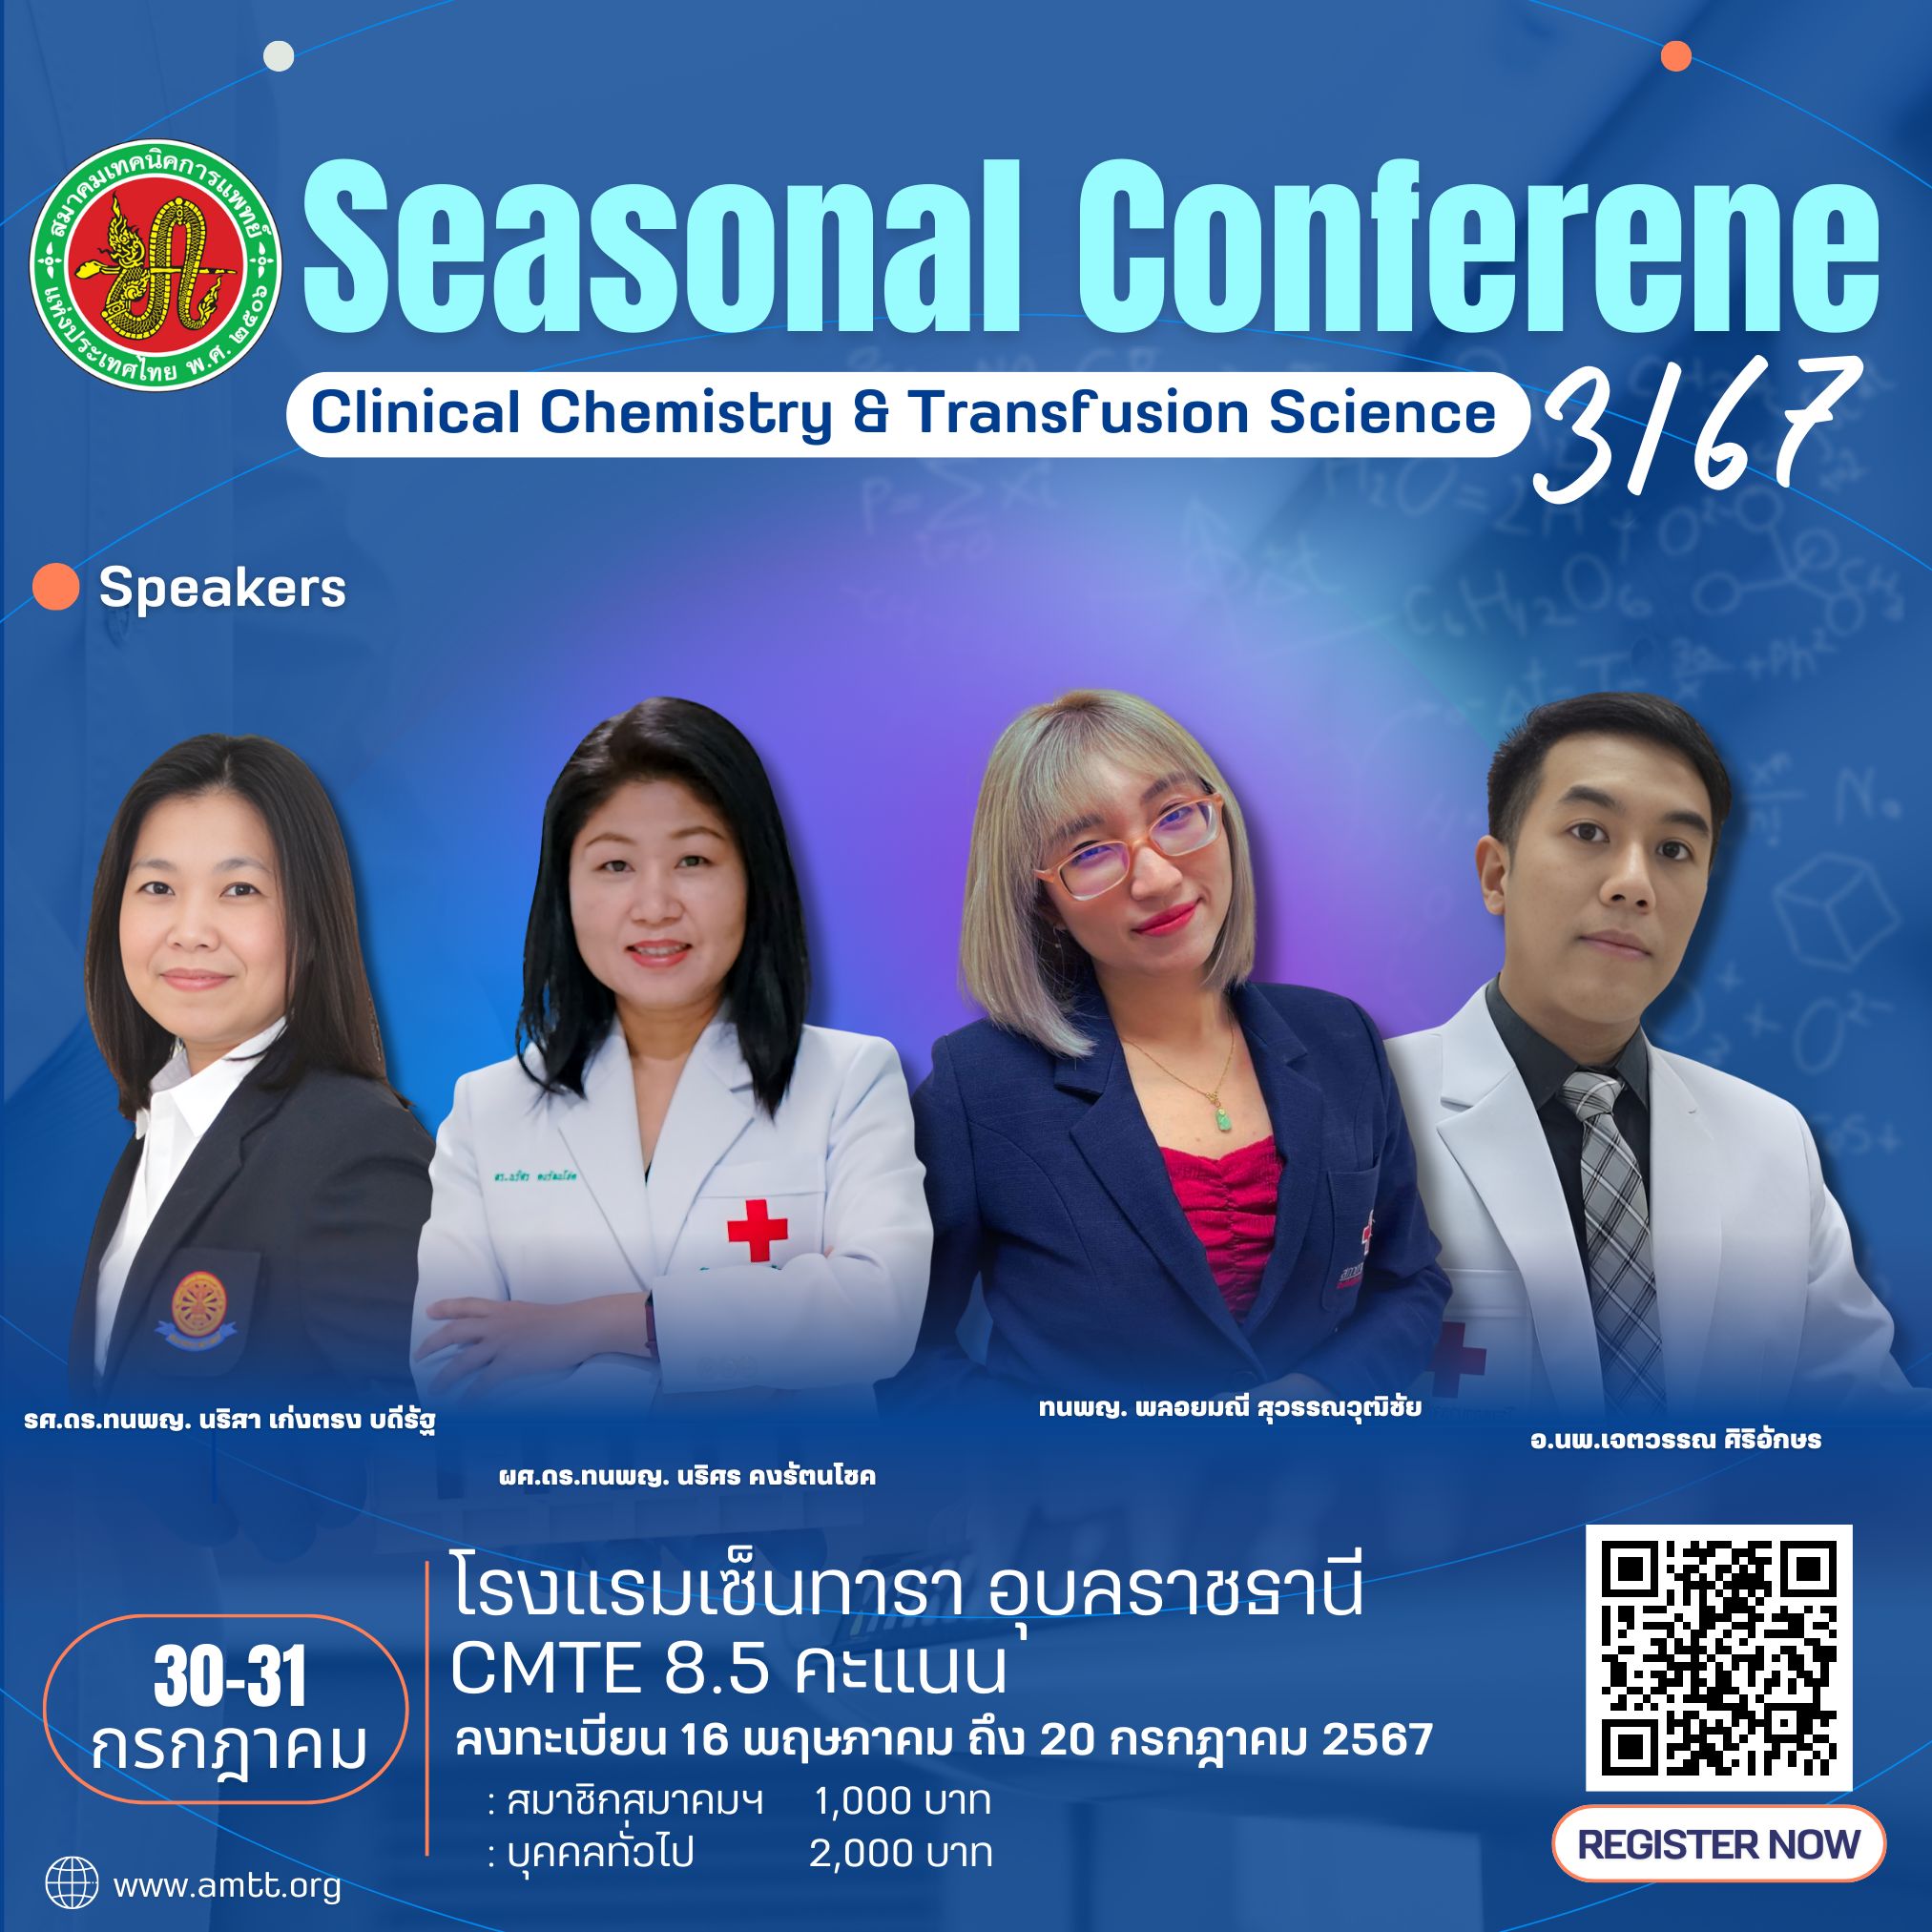 Seasonal Conference 67 อุบล.png